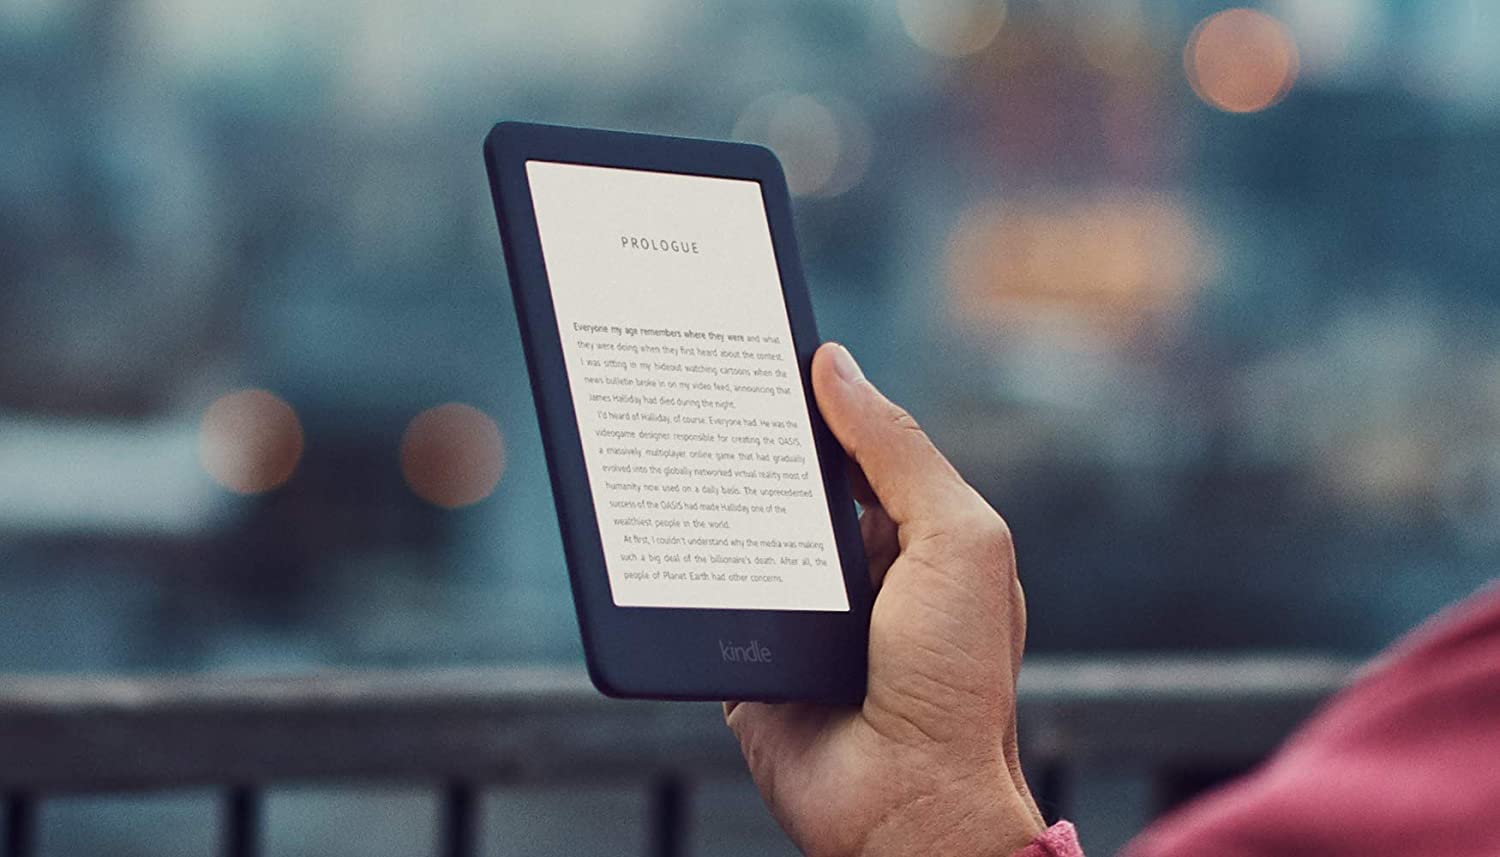 کتابخوان الکترونیکی کیندل All-New Kindle (10th Gen) - ارسال ۱۰ الی ۱۵ روز کاری